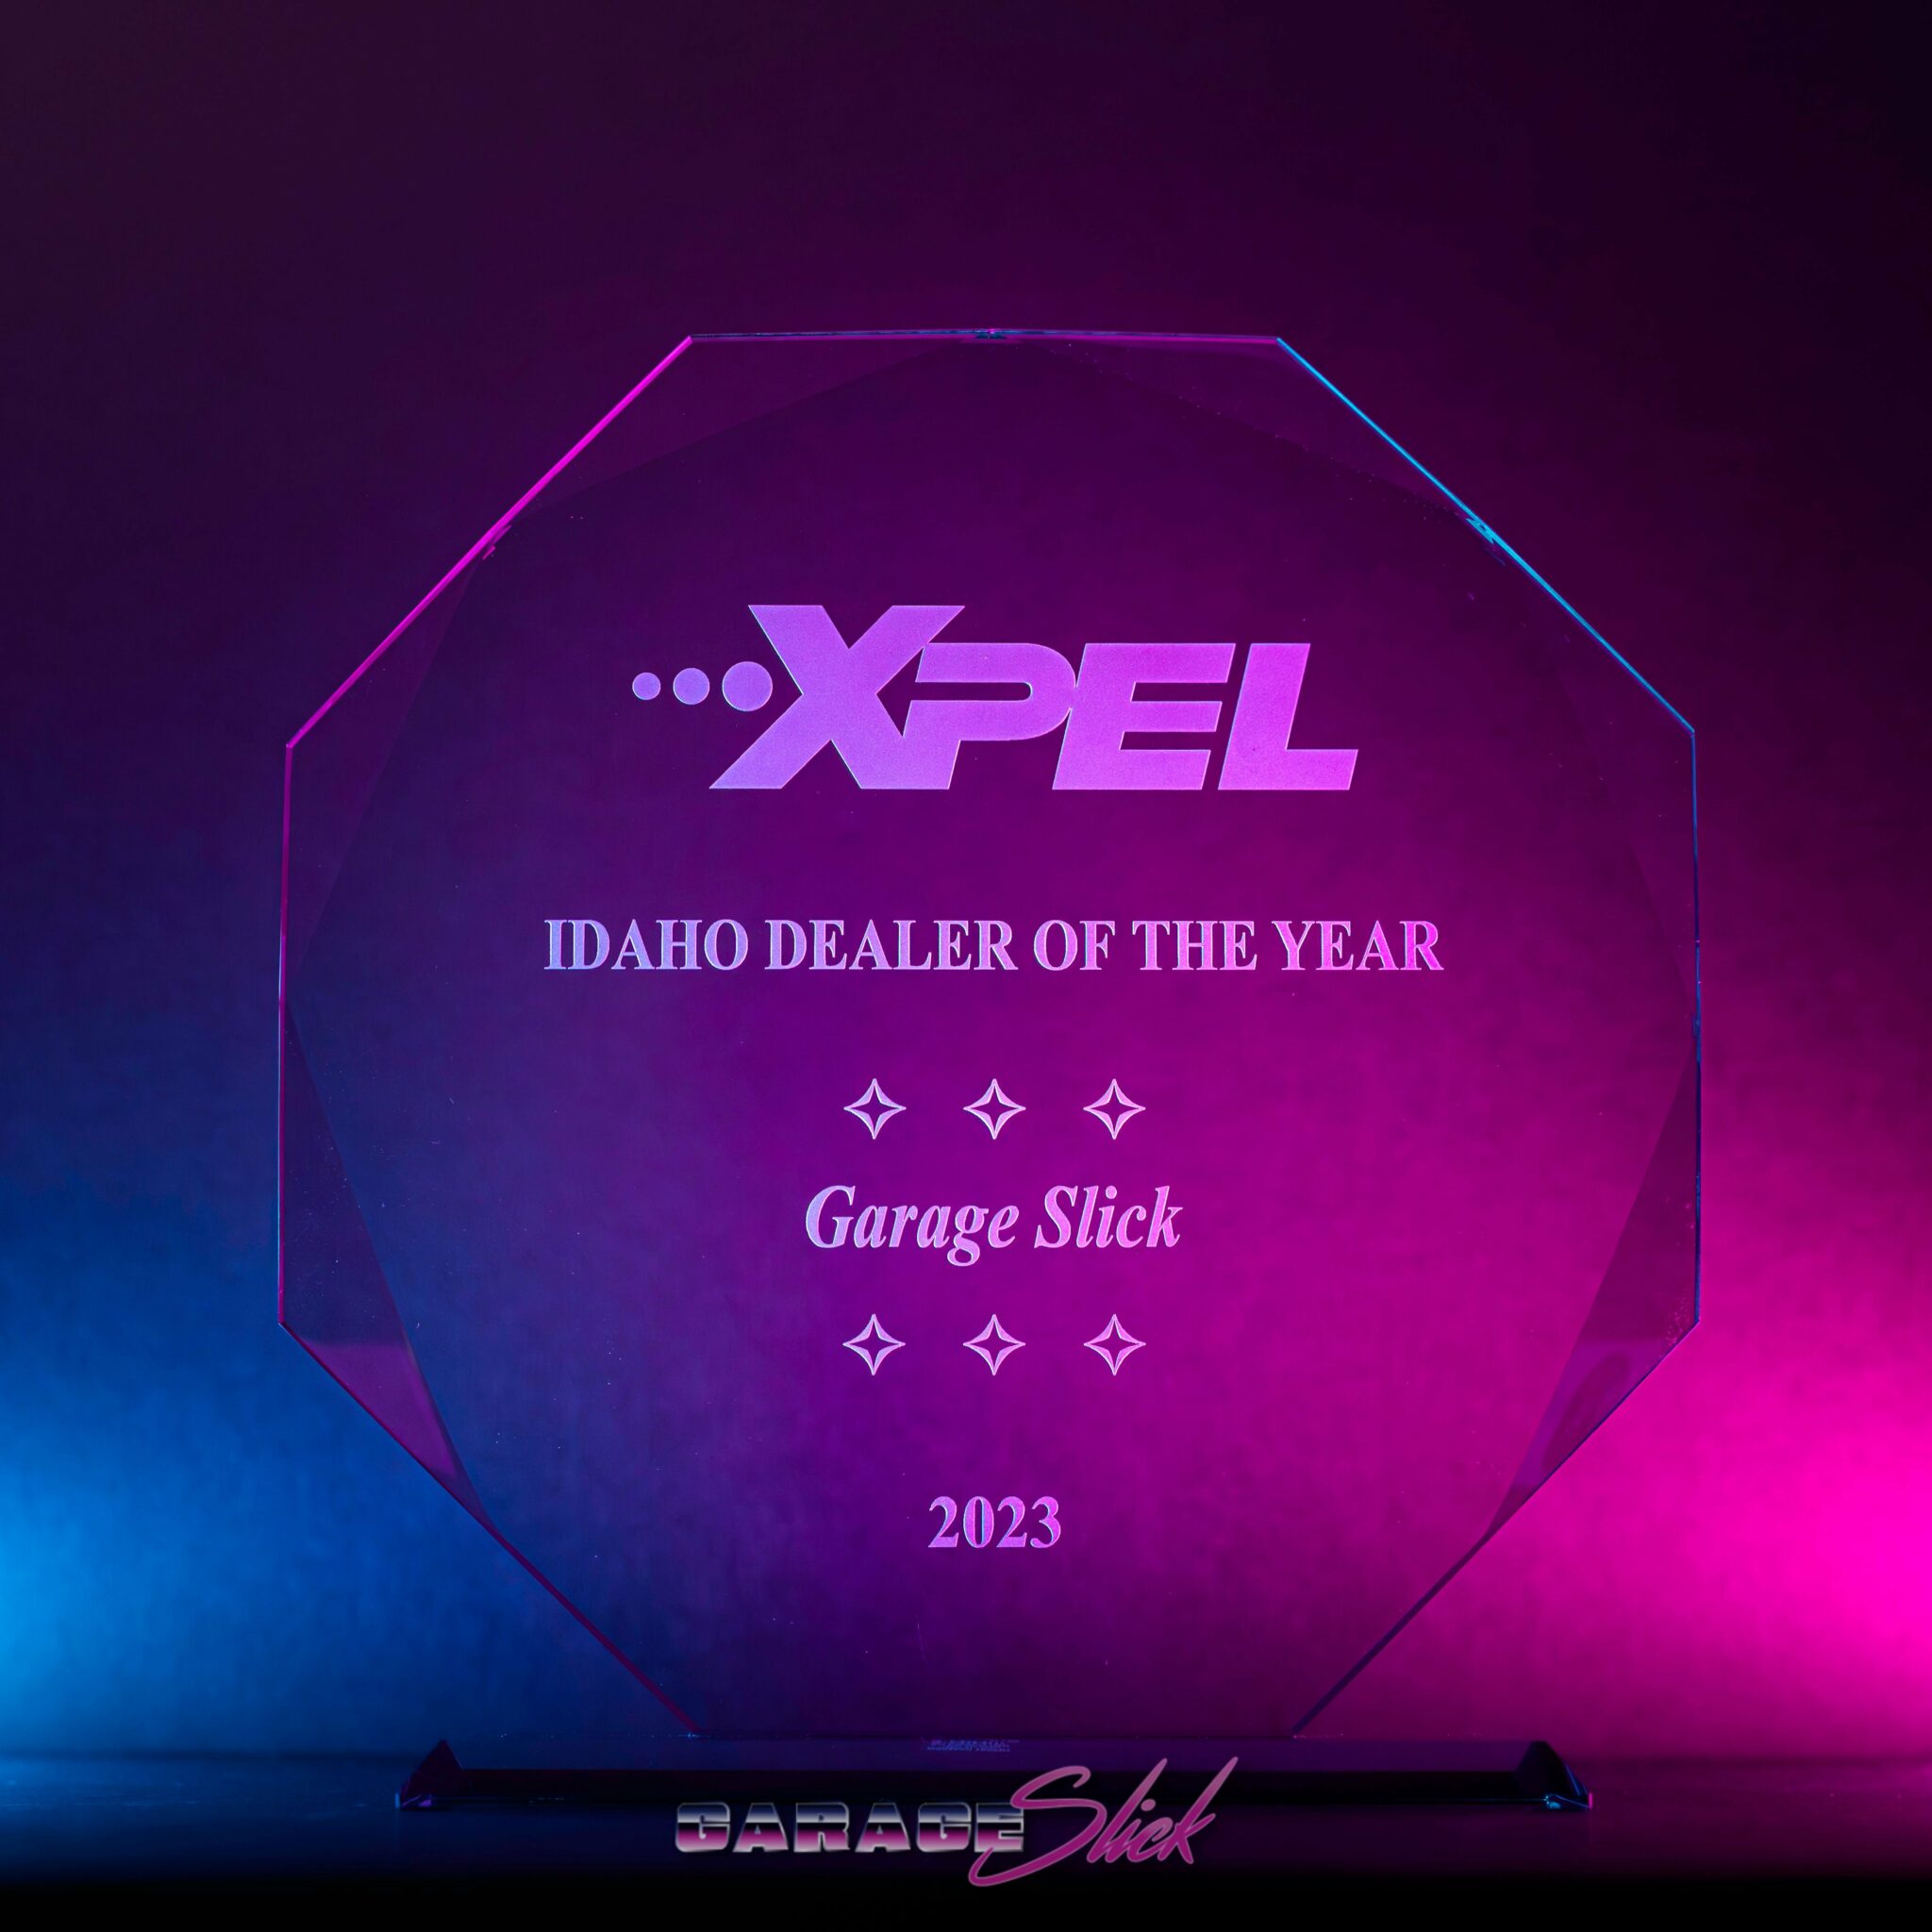 XPEL Idaho Dealer of the Year Award - Garage Slick 2023